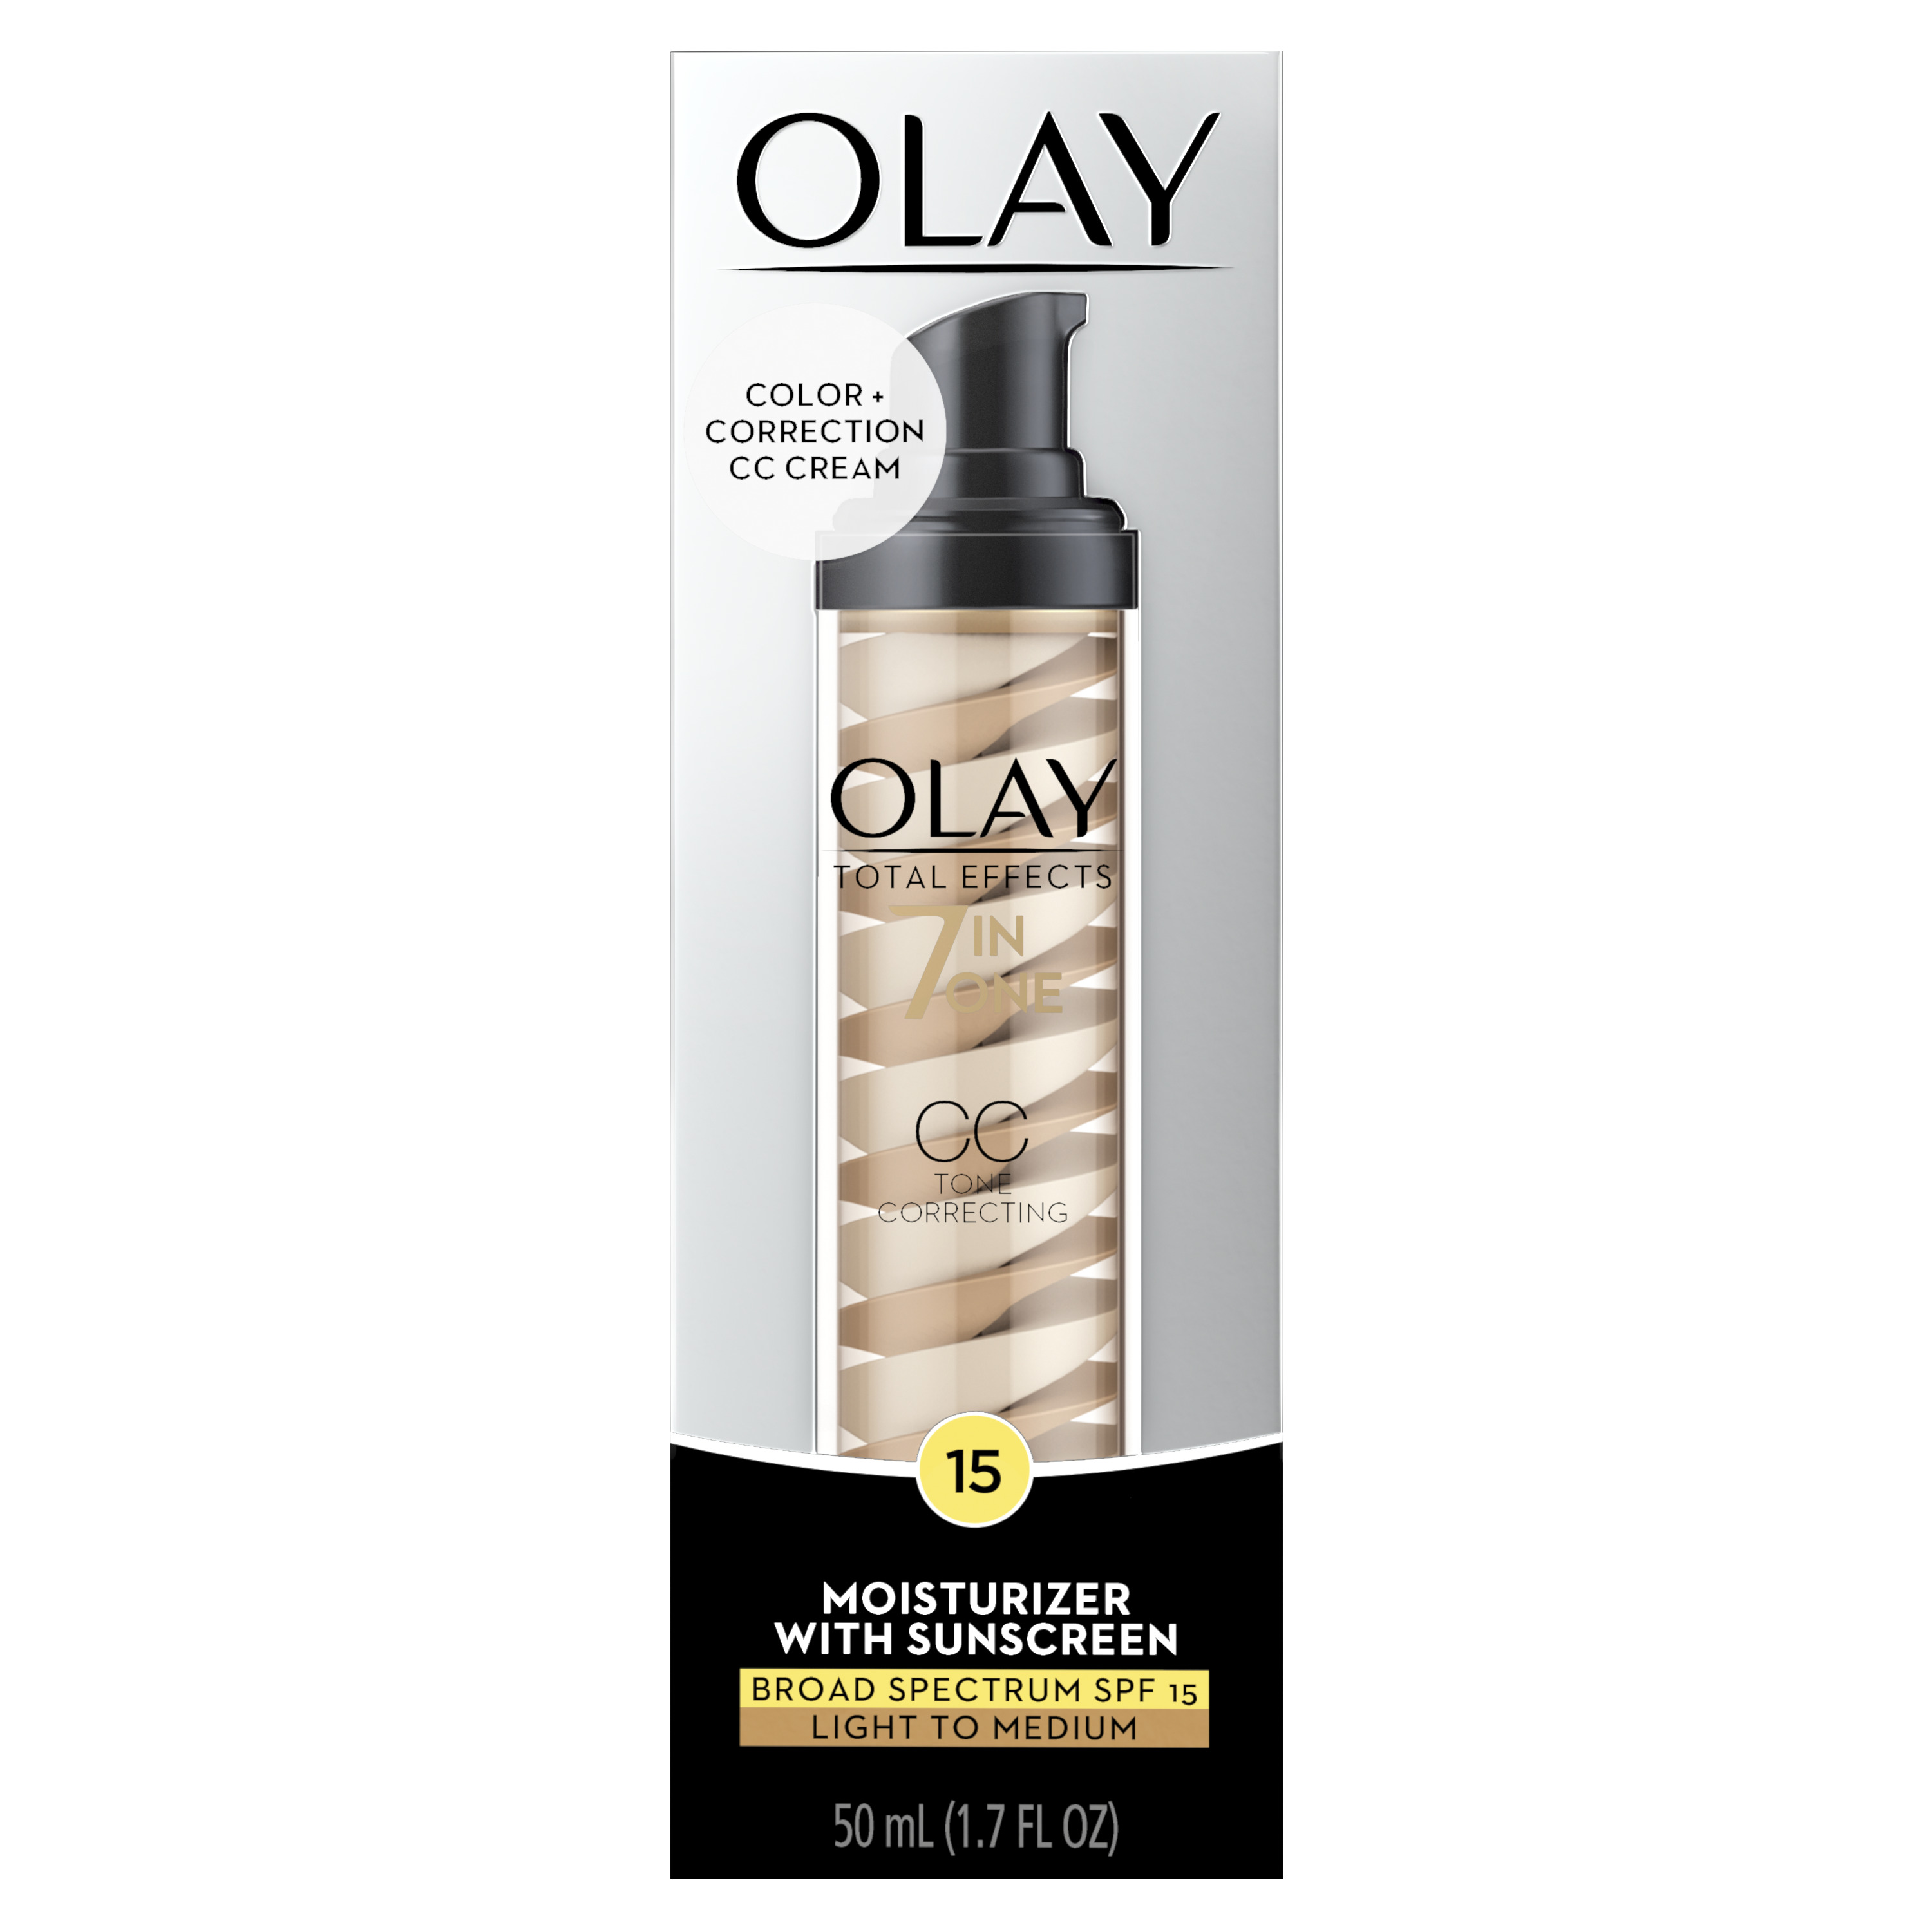 Olay Total Effects Skin CC Cream, Tone Correcting, SPF 15, 1.7 Fl Oz - image 1 of 8